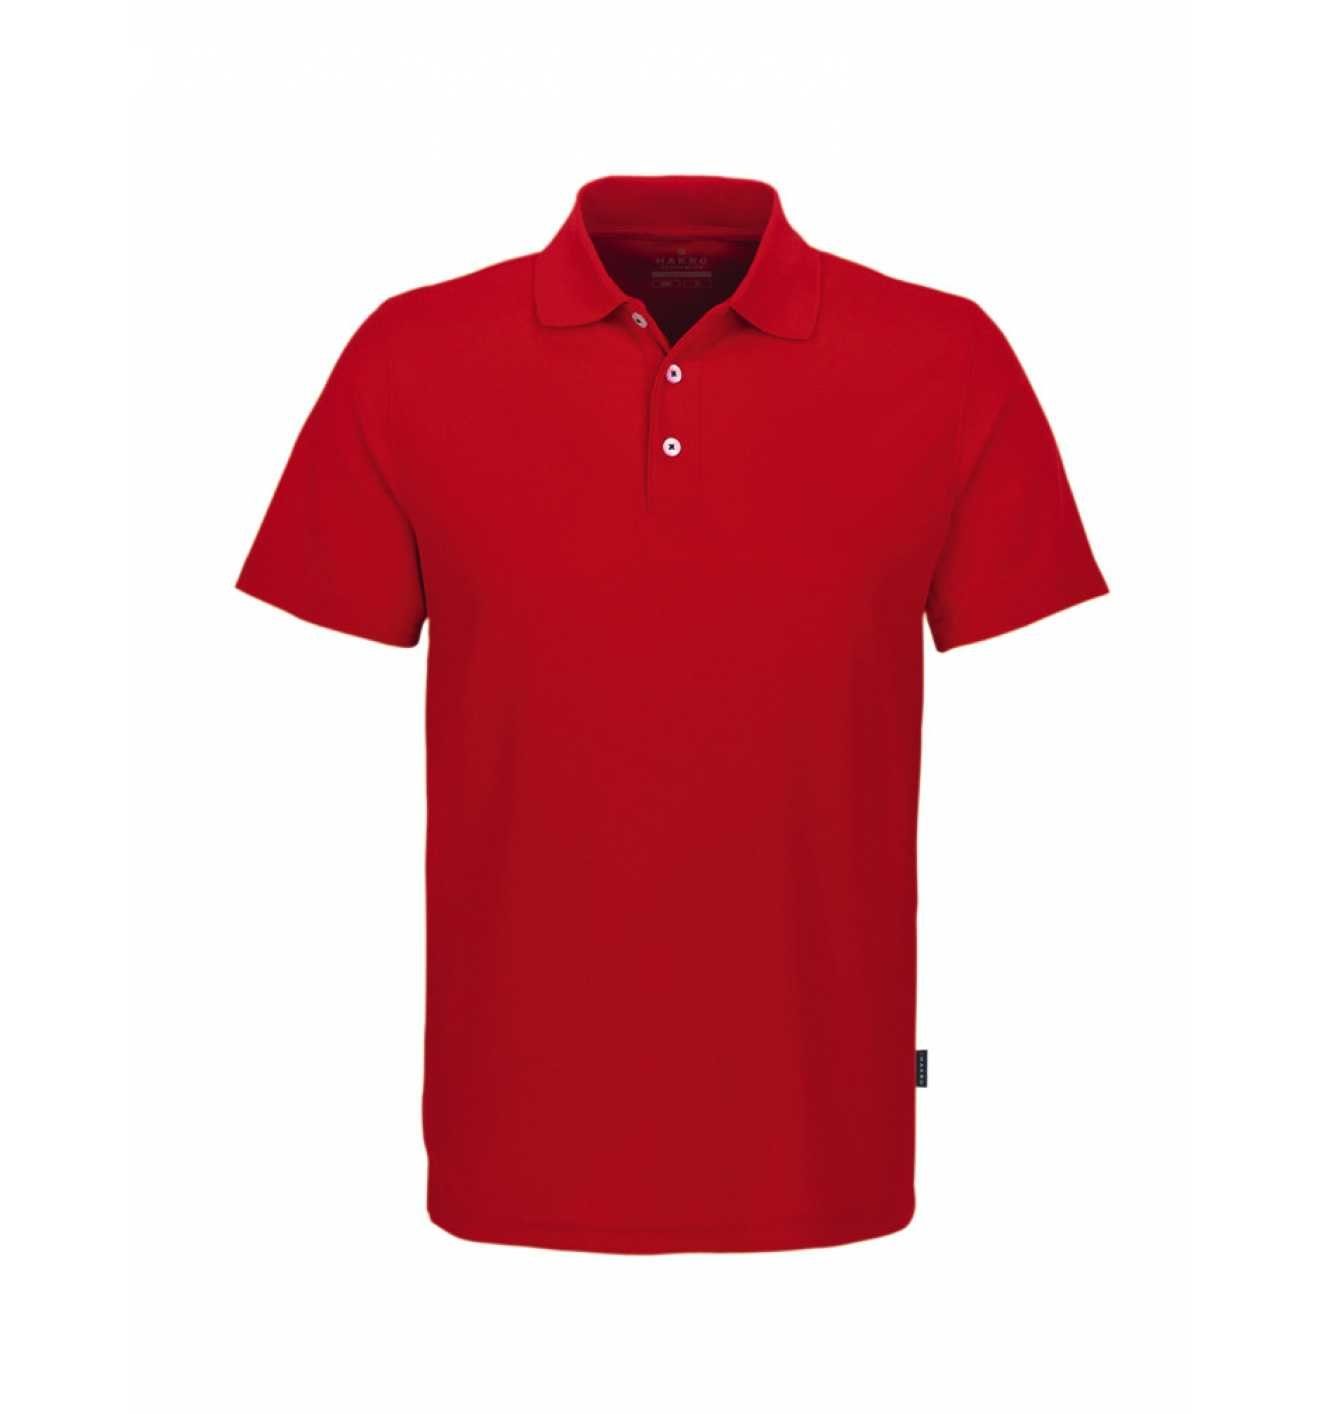 Hakro Poloshirt Coolmax #806 Herren (Kein Set, 1-tlg., 1er-Pack) sportlich körpernah geschnitten rot